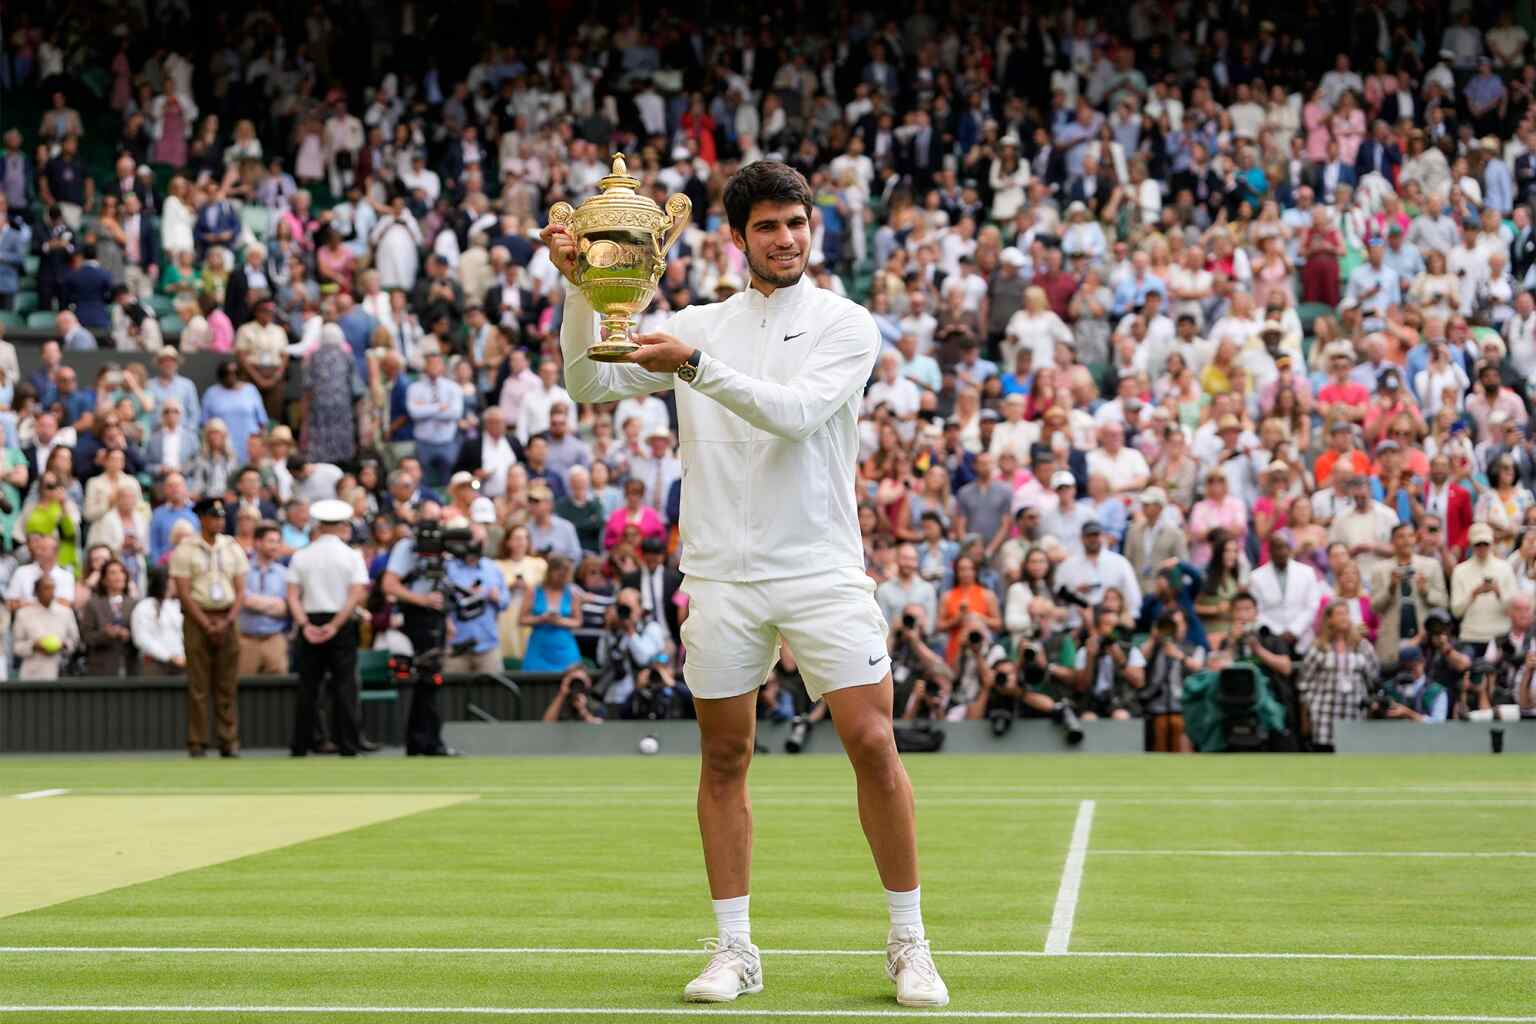 20-yr-old Carlos Alcarez defeats Novak Djokovic to win first Wimbledon title